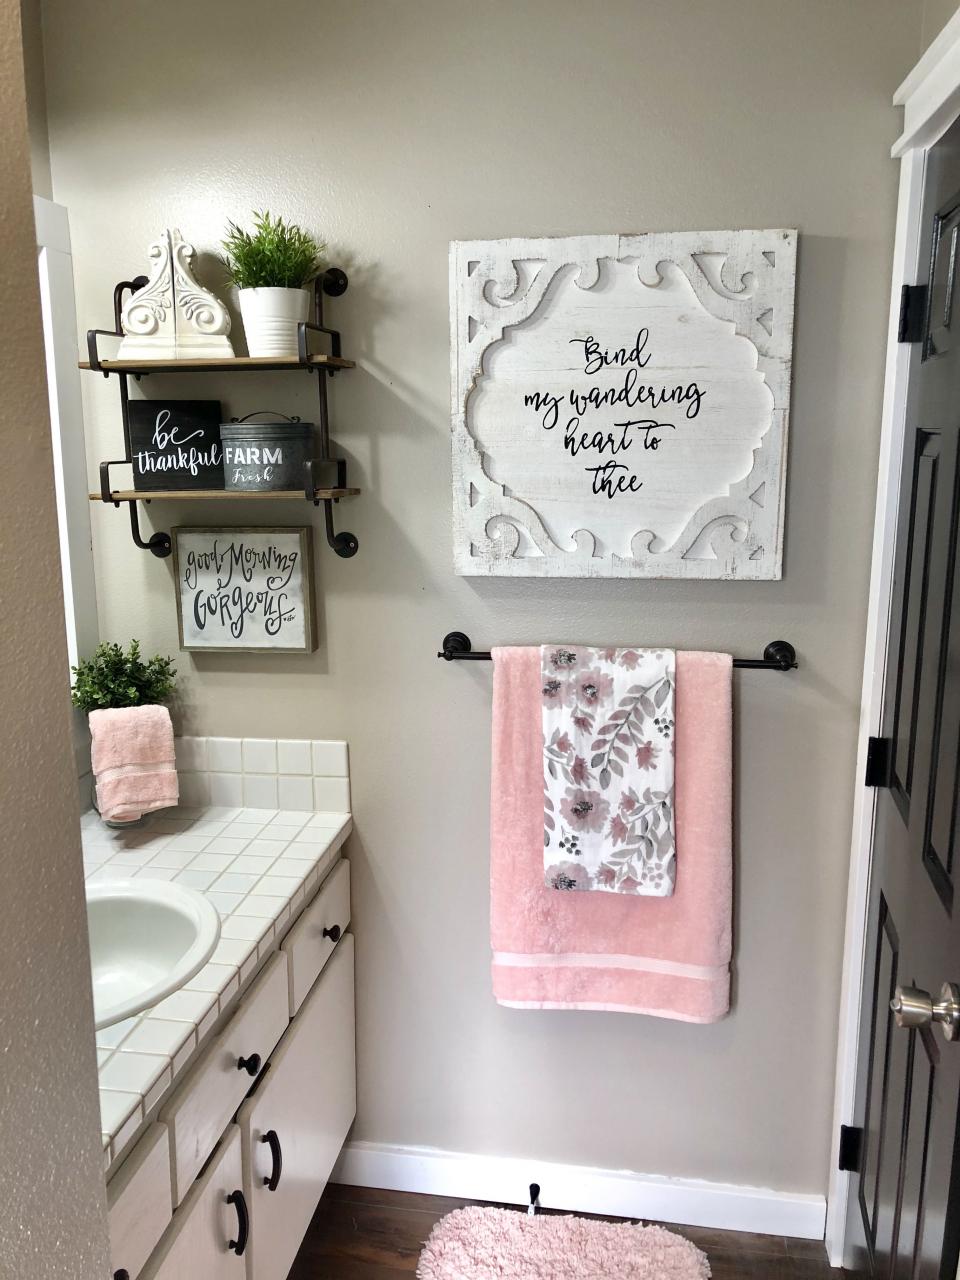 Bathroom Ideas Grey And Pink